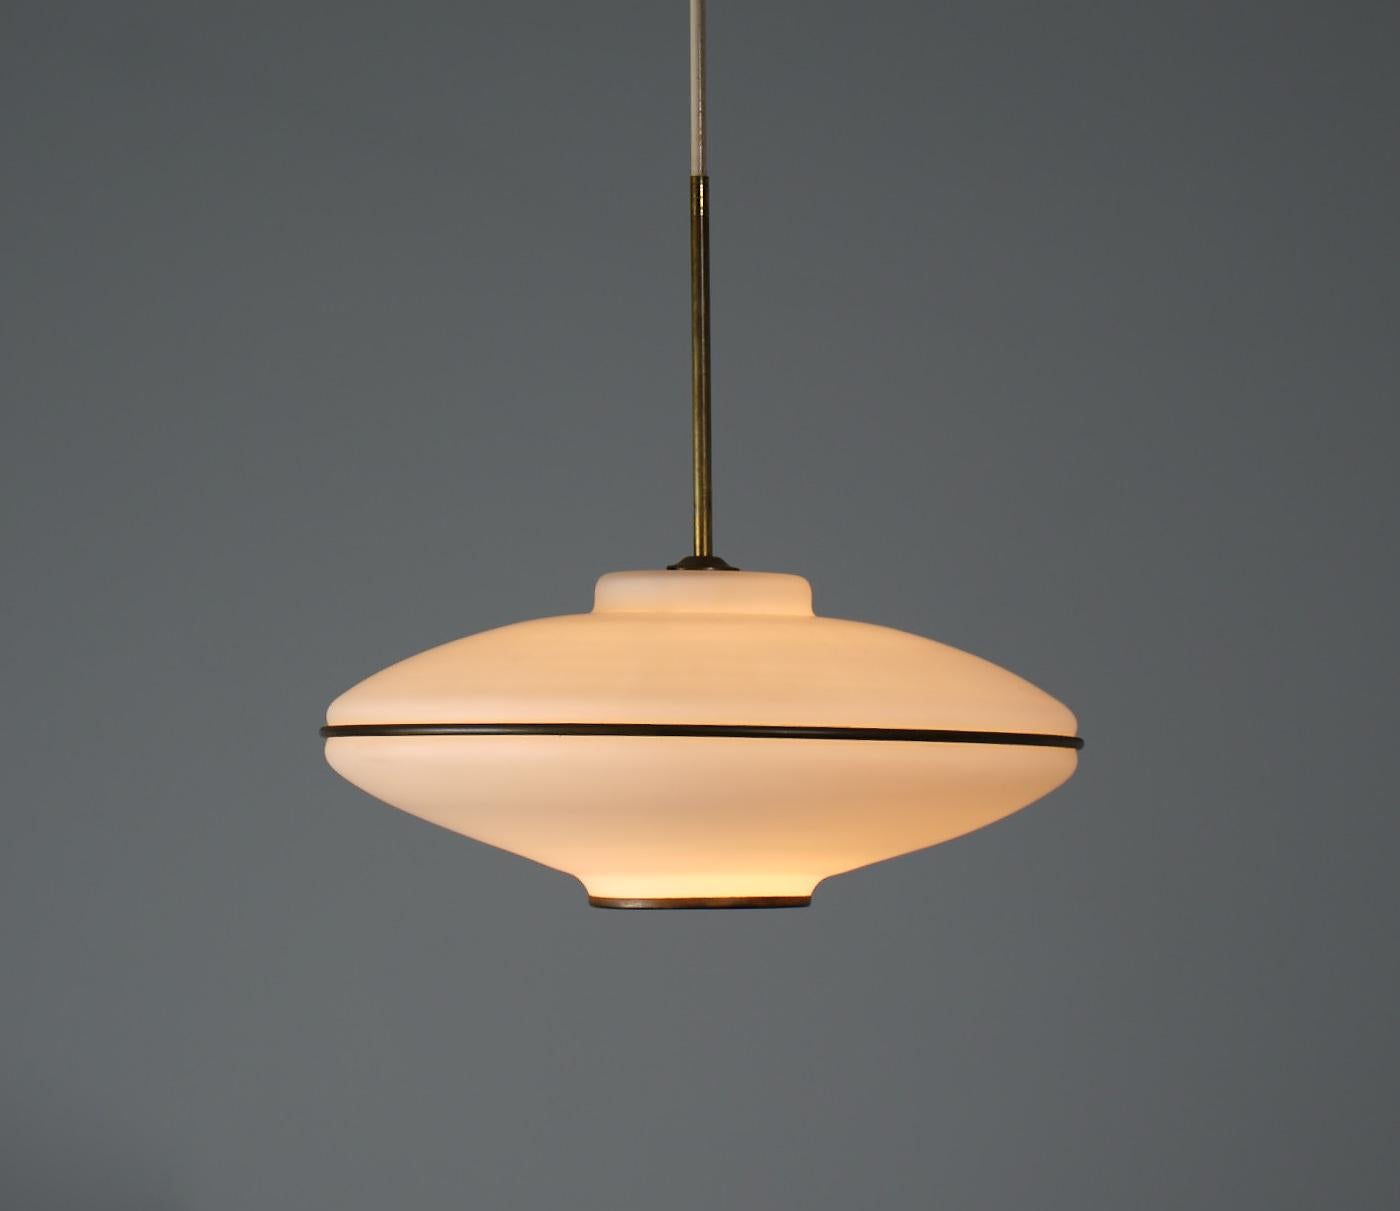 Metal Italian Flying Saucer Pendant Lamp - Vintage 1950s Modernist Ceiling Light For Sale